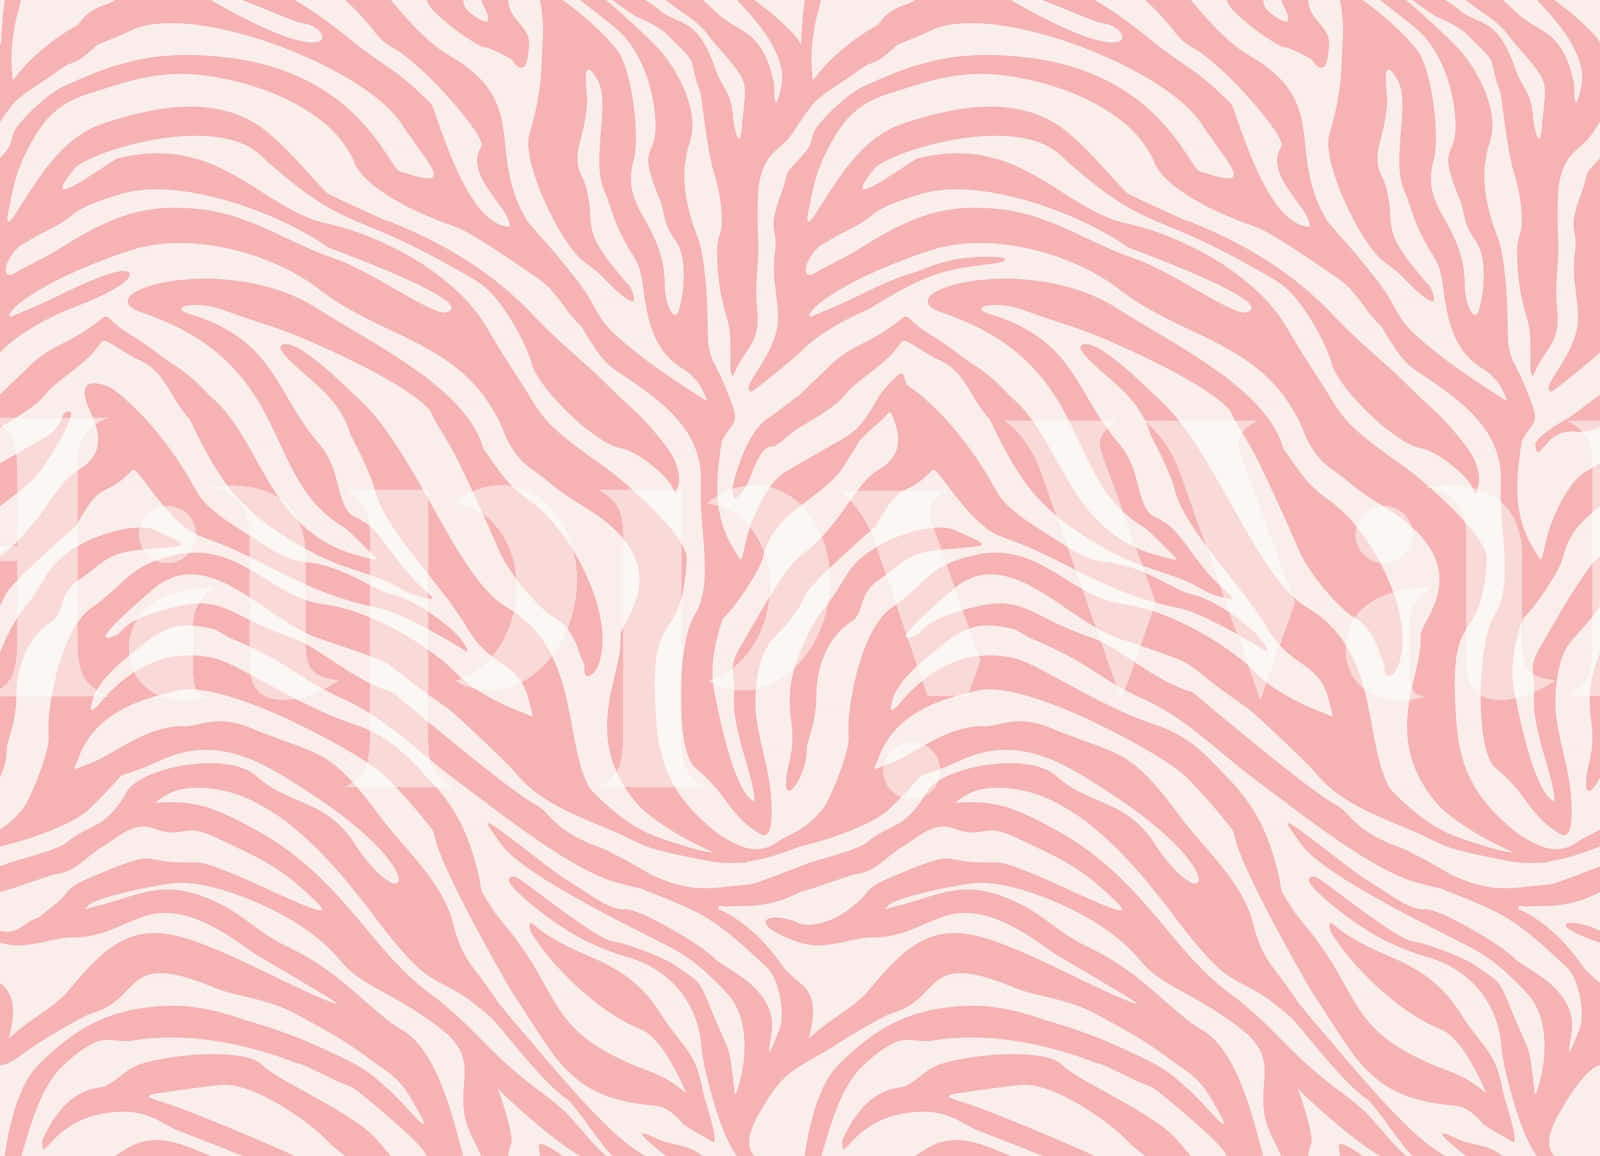 A Pink And White Zebra Print Pattern Background